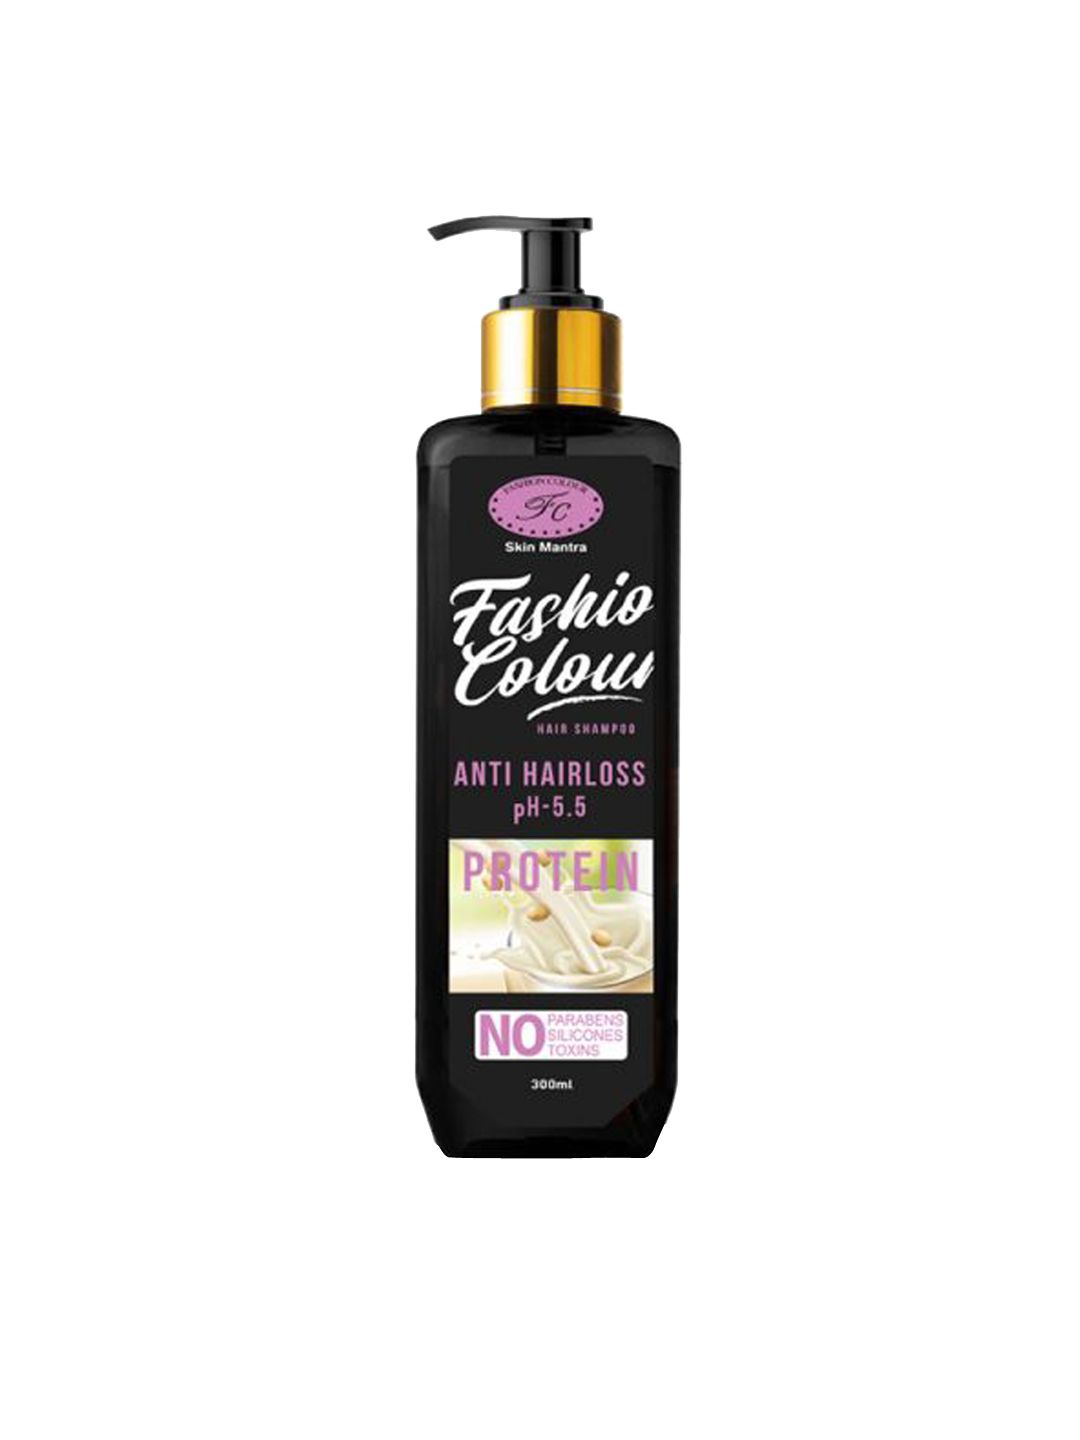 Fashion Colour Anti-Hair Loss Shampoo for Dry Hair & Split Ends - 300ml Price in India